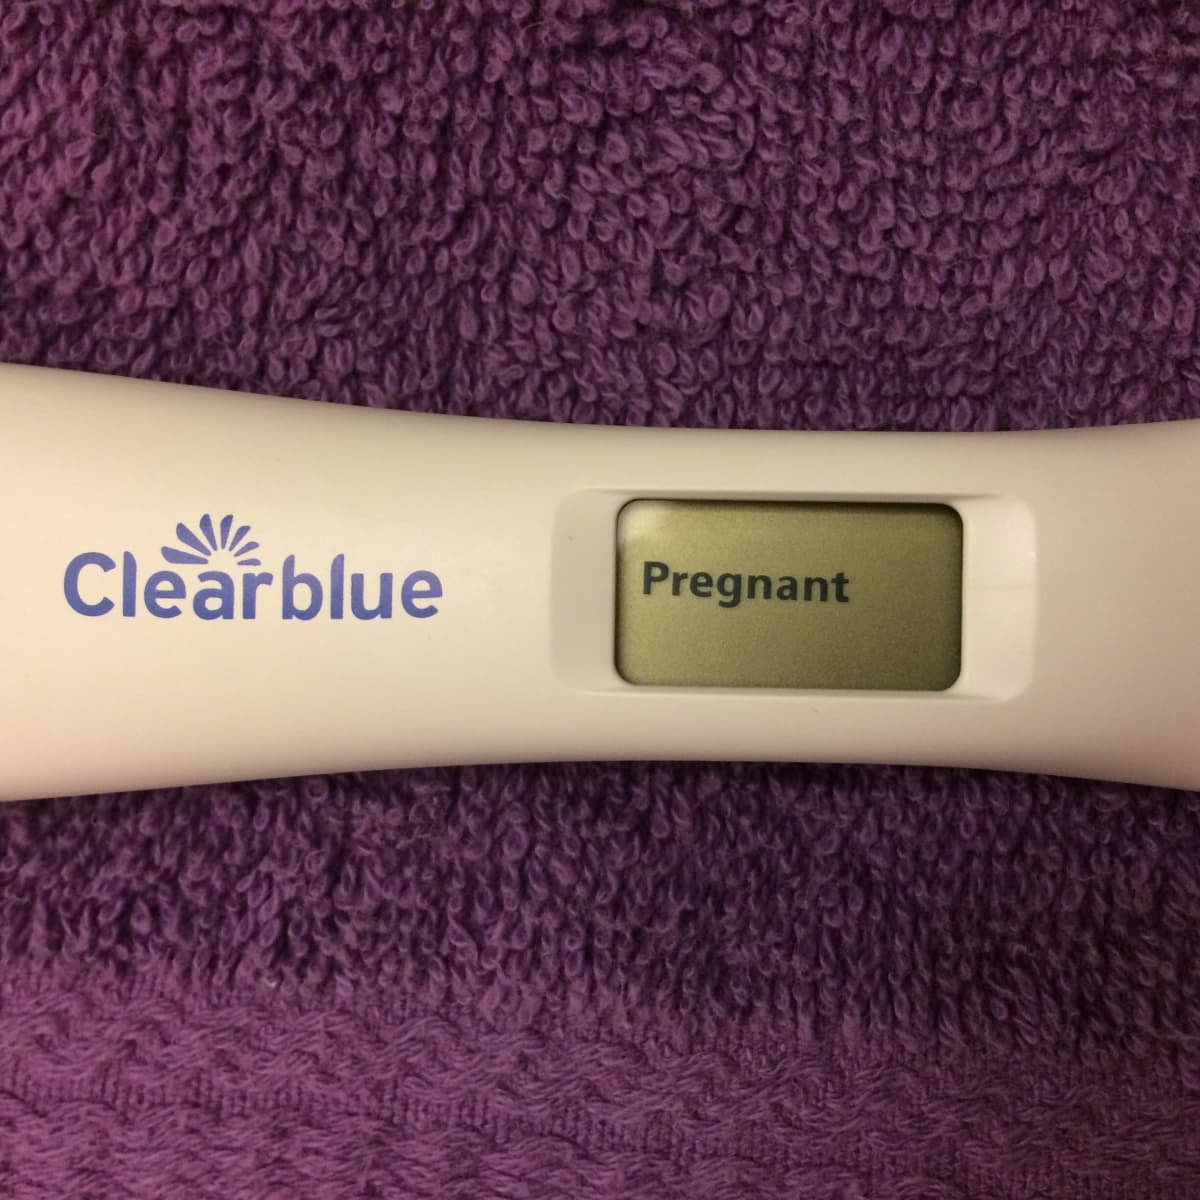 CLEARBLUE, Digital Pregnancy Test Kit 1's